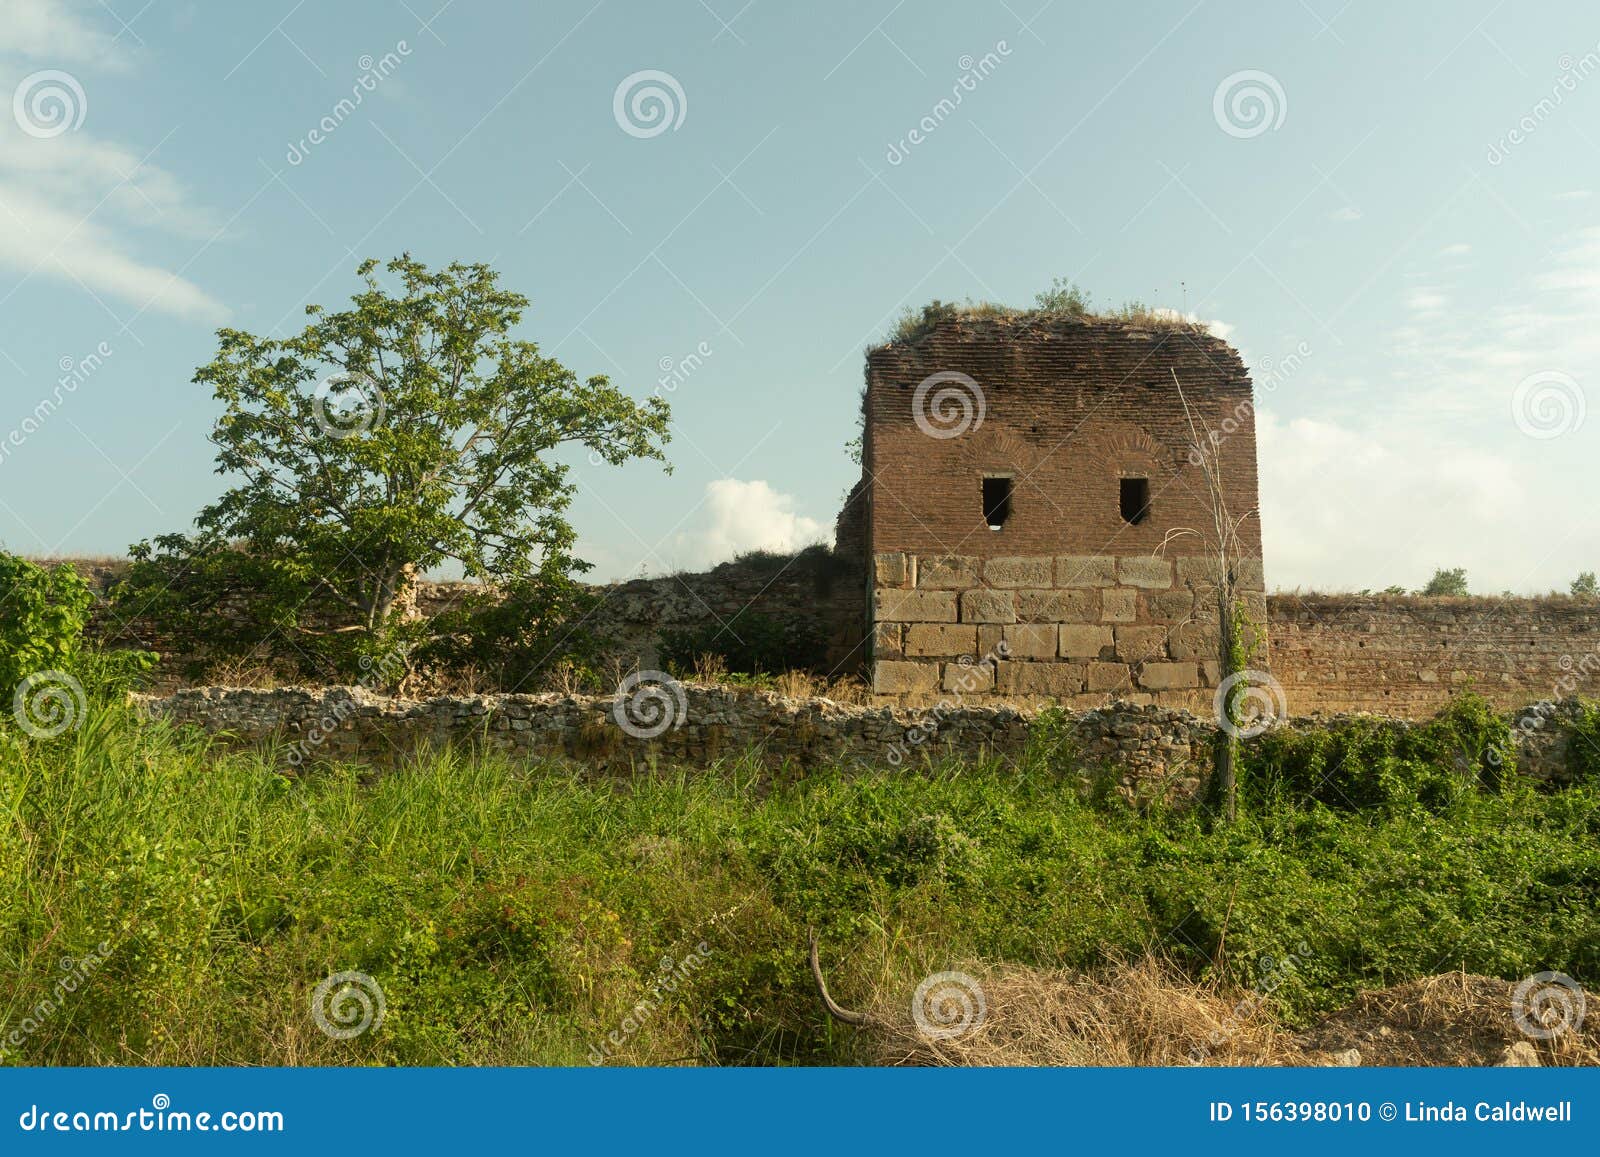 ancient roman walls of nicea